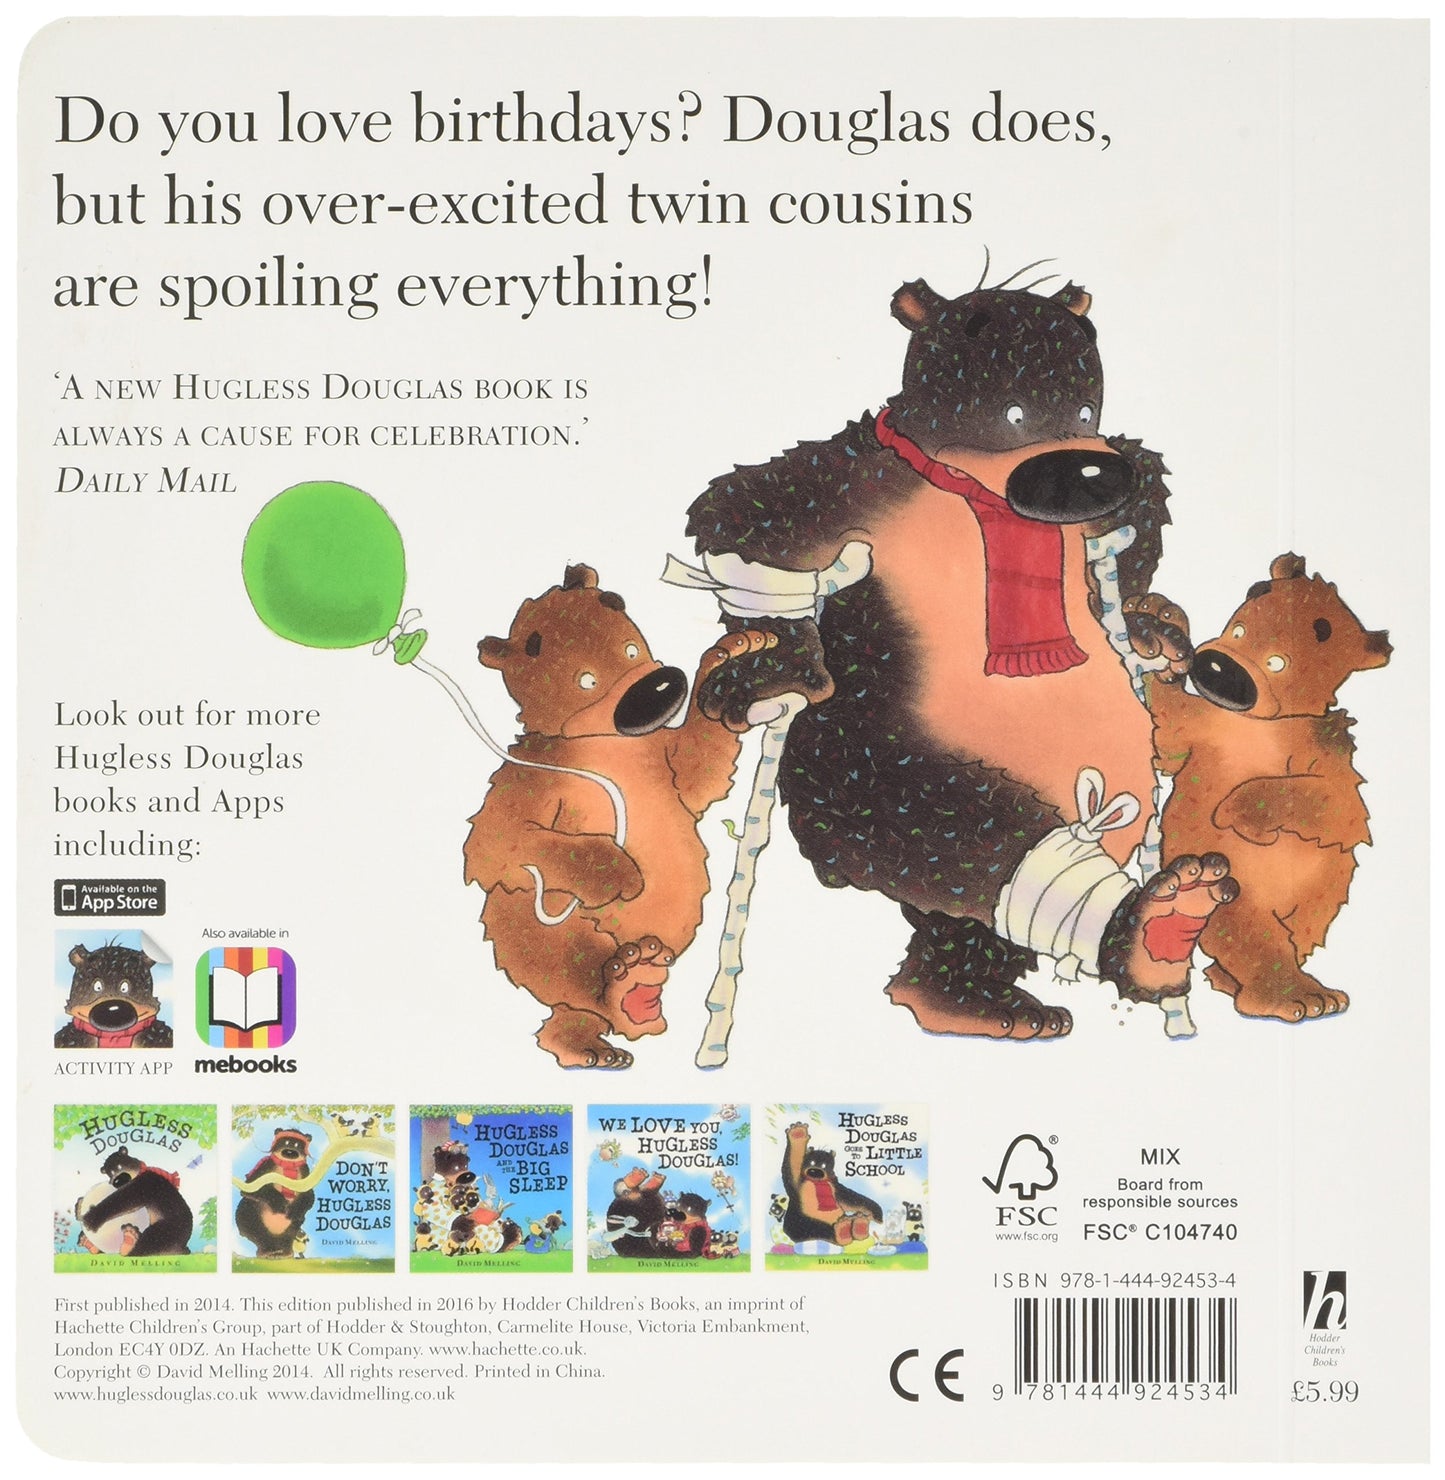 Happy Birthday Hugless Douglas (Board Book) by David Melling